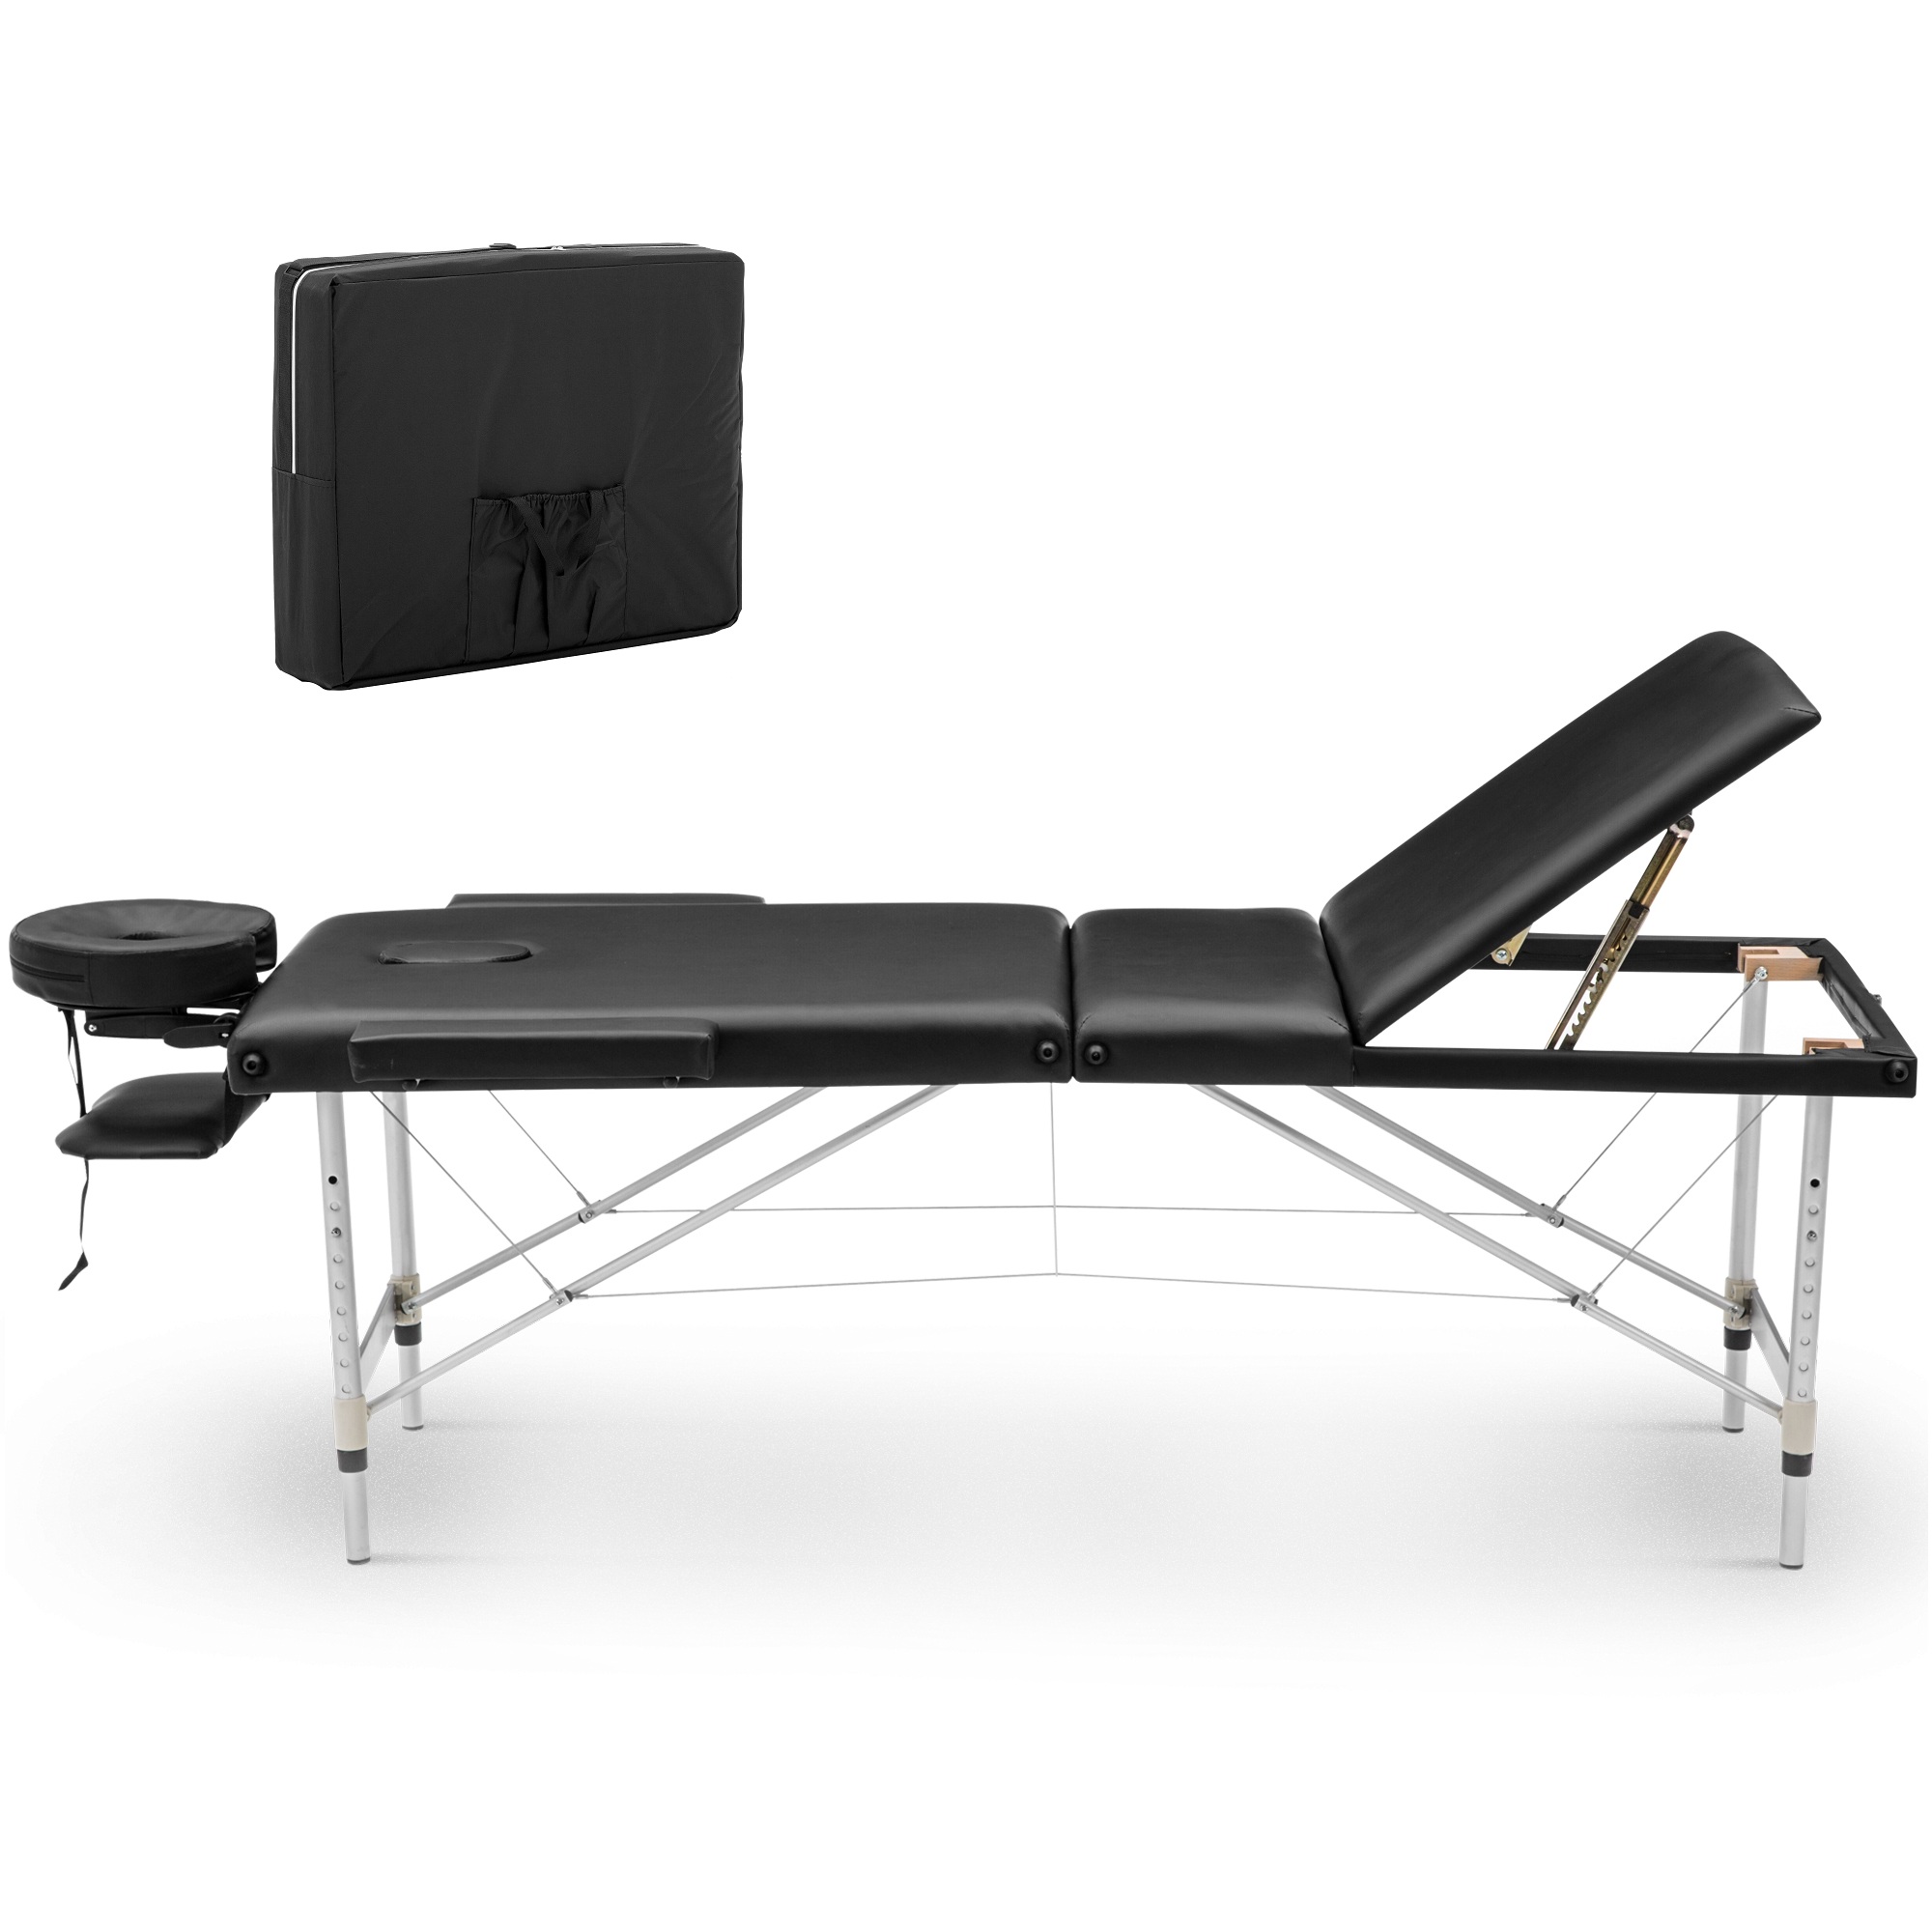 

[US DIRECT] Merax Aluminium 3 Section Portable Folding Massage Table Facial SPA Tattoo Bed